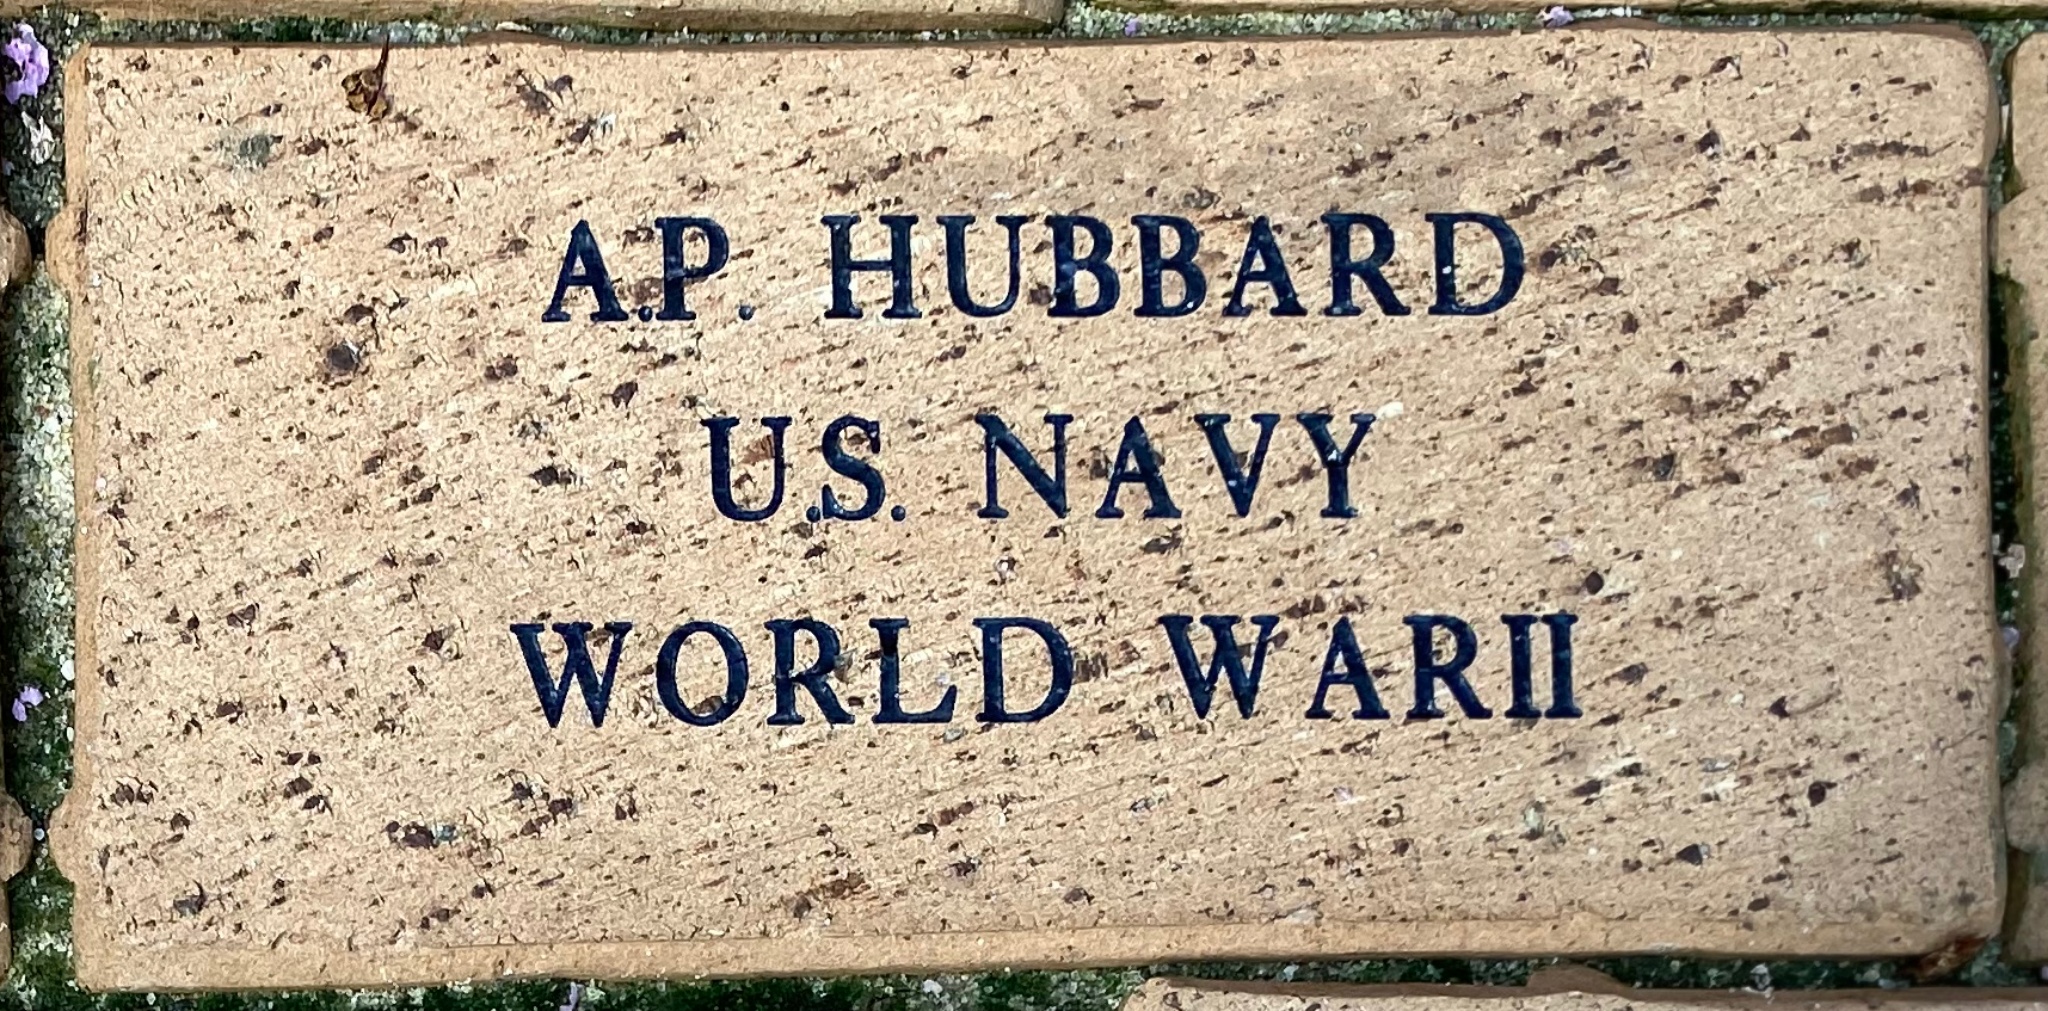 A.P. HUBBARD U.S. NAVY WORLD WAR II